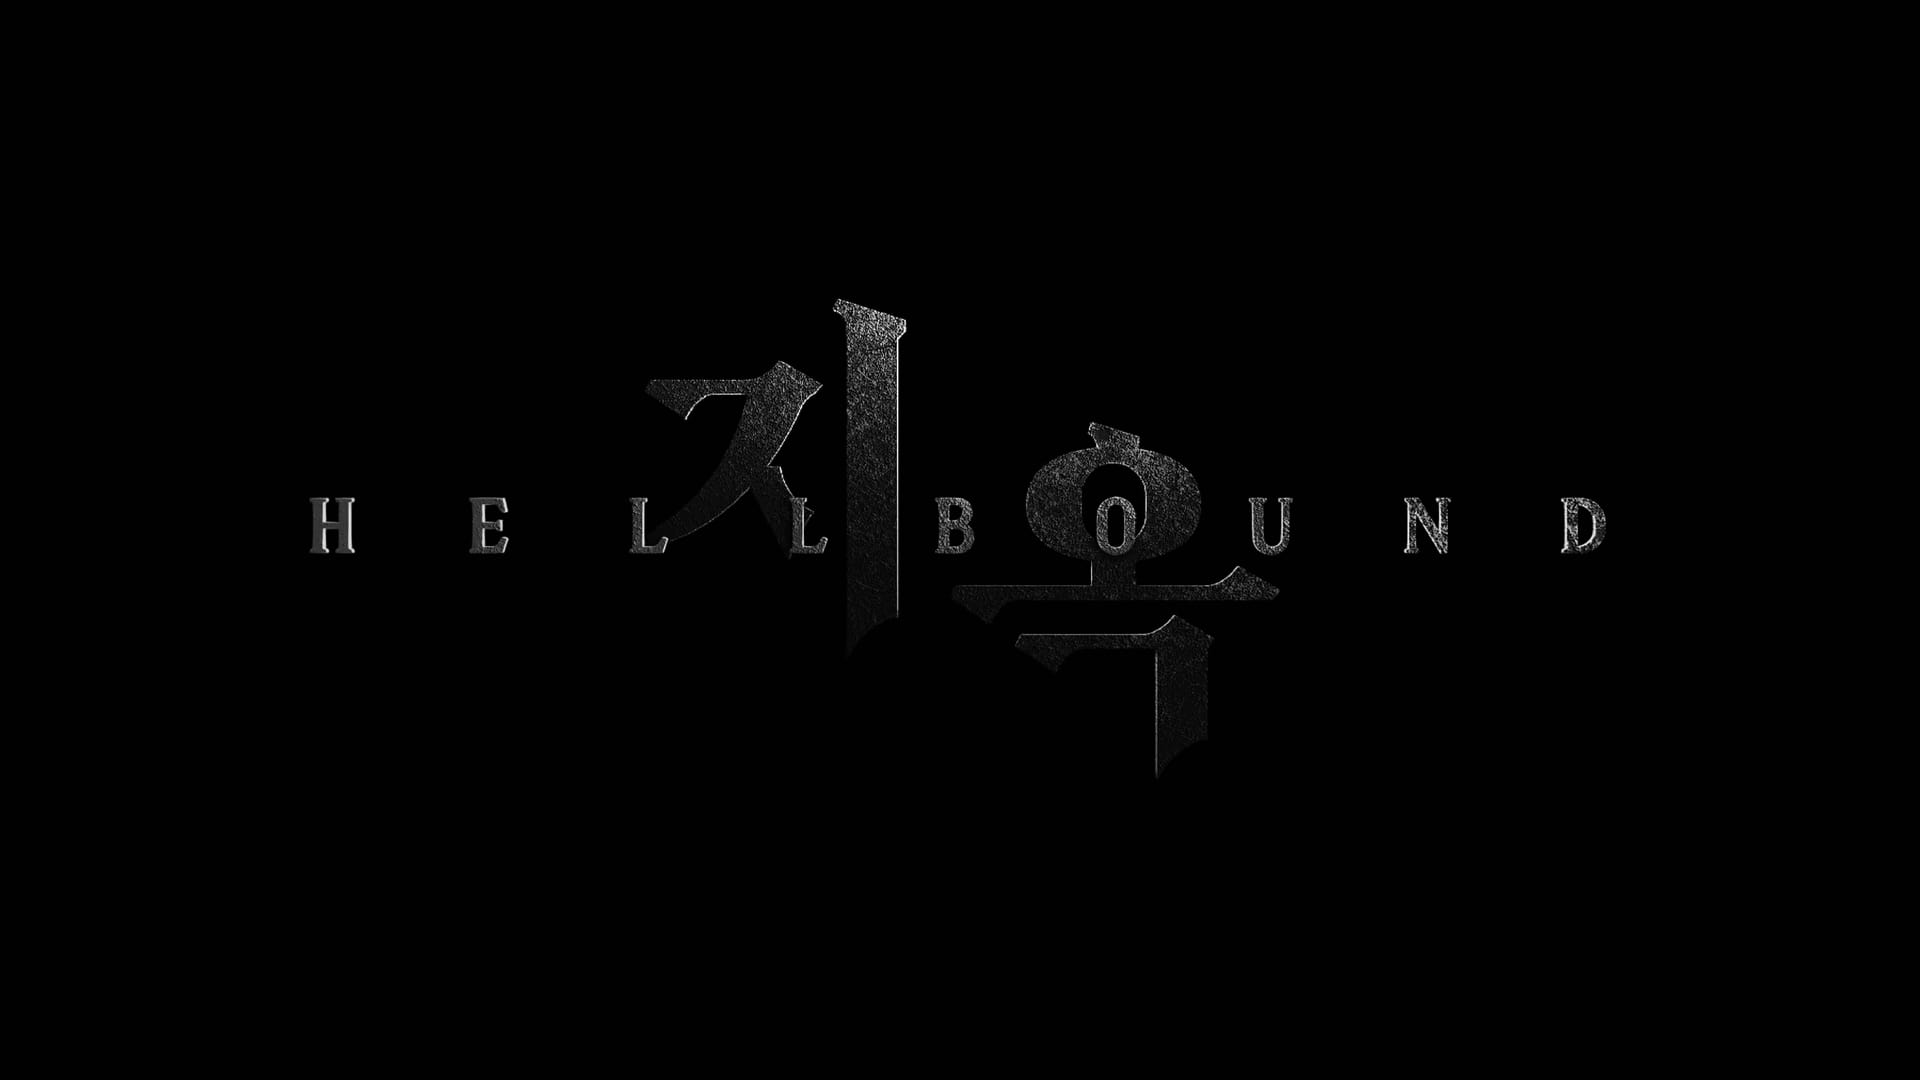 Netflix Hellbound Trailer, Coming to Netflix in November 2021